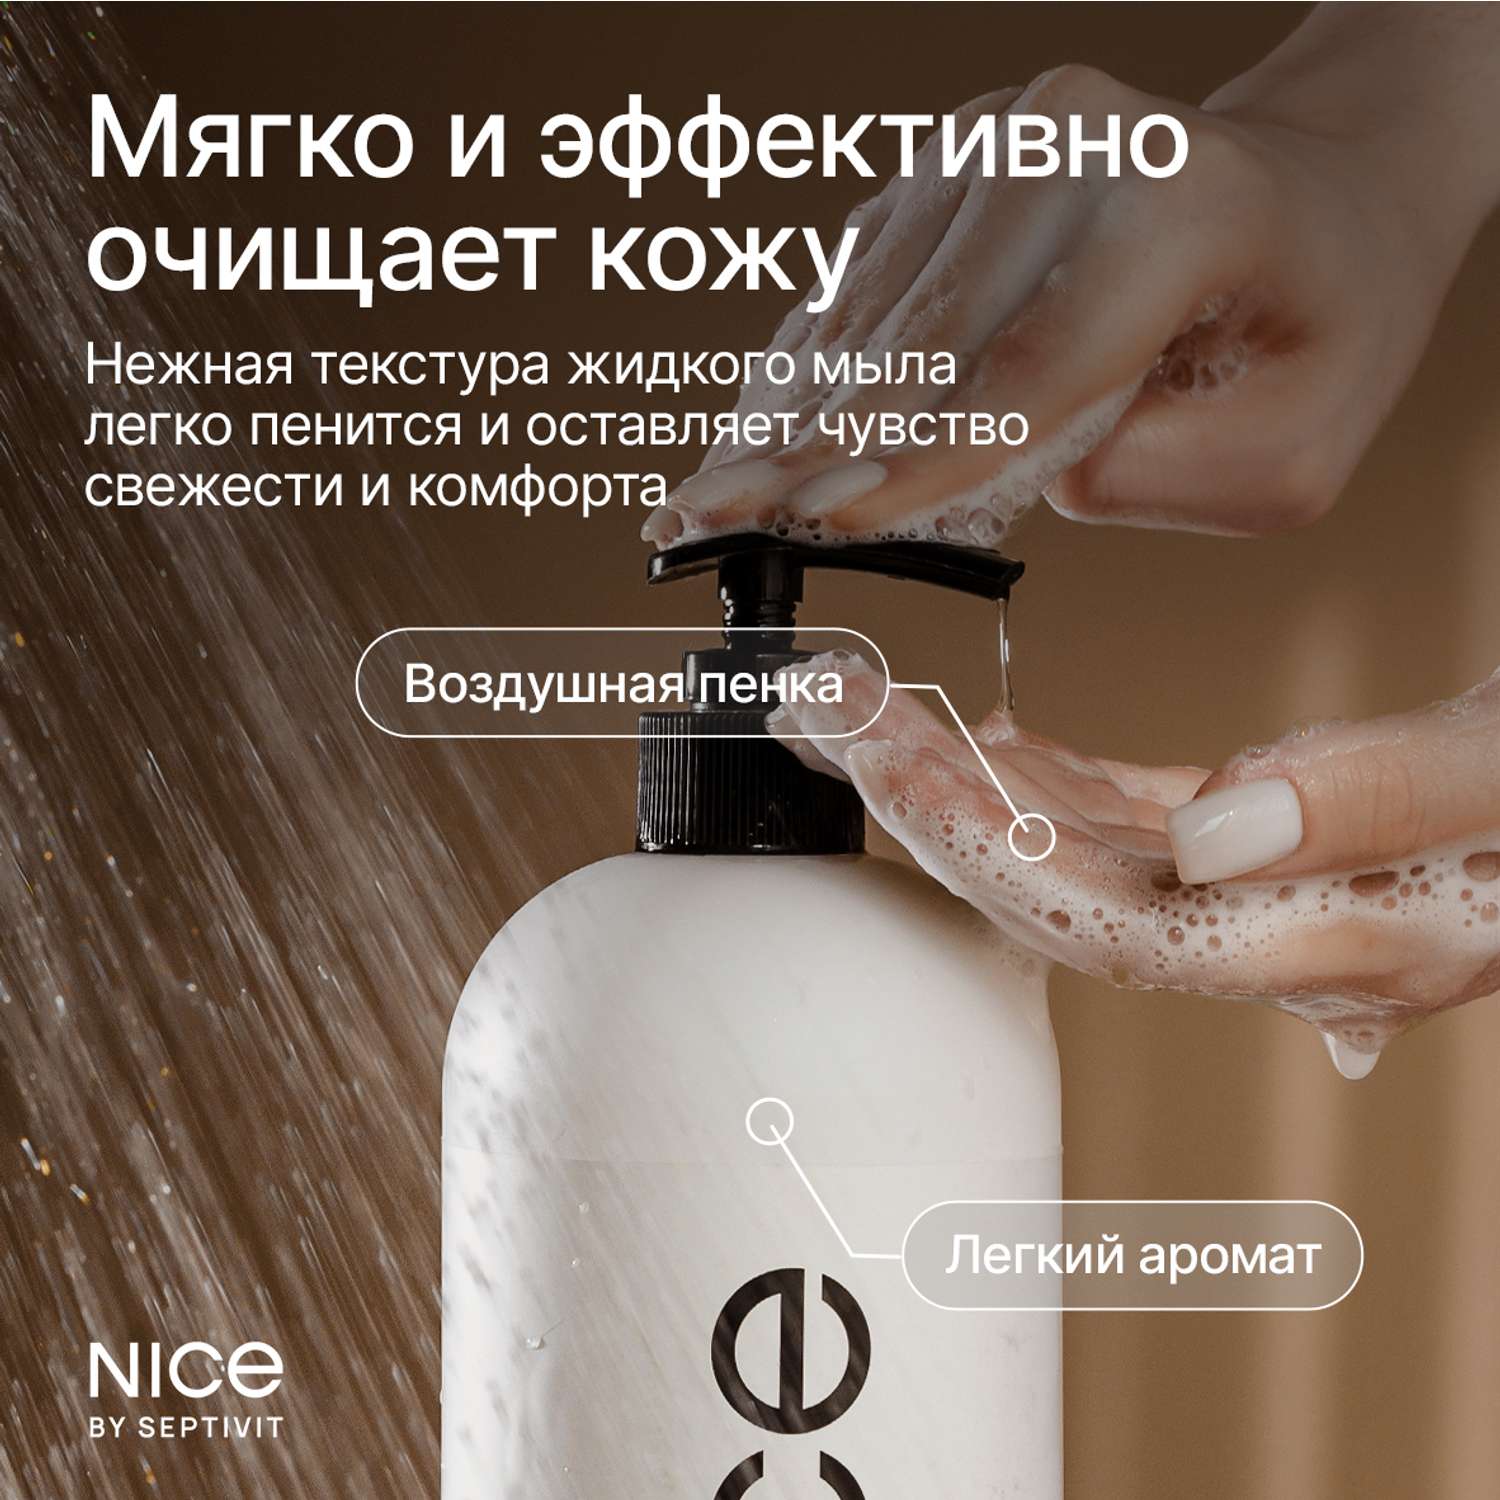 Жидкое мыло NICE by Septivit с ароматом Авокадо-манго 1л - фото 4